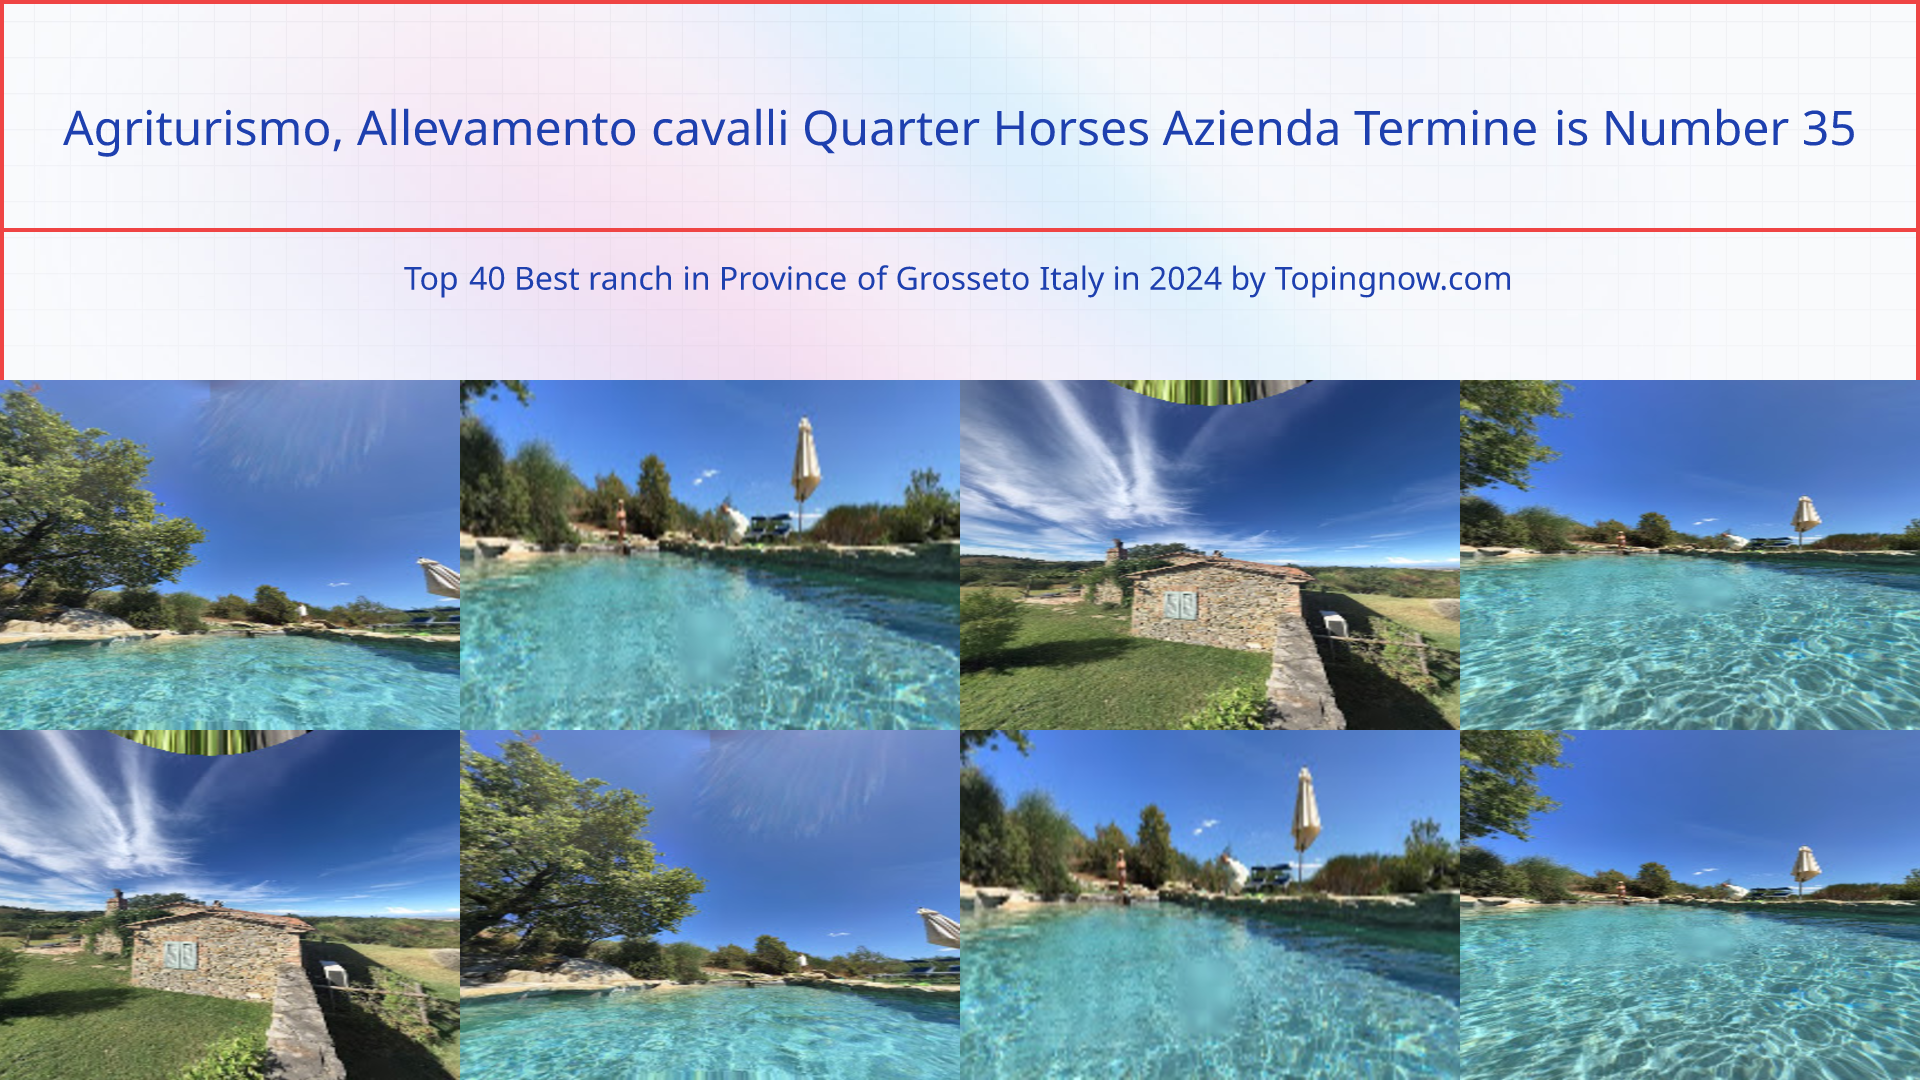 Agriturismo, Allevamento cavalli Quarter Horses Azienda Termine: Top 40 Best ranch in Province of Grosseto Italy in 2024